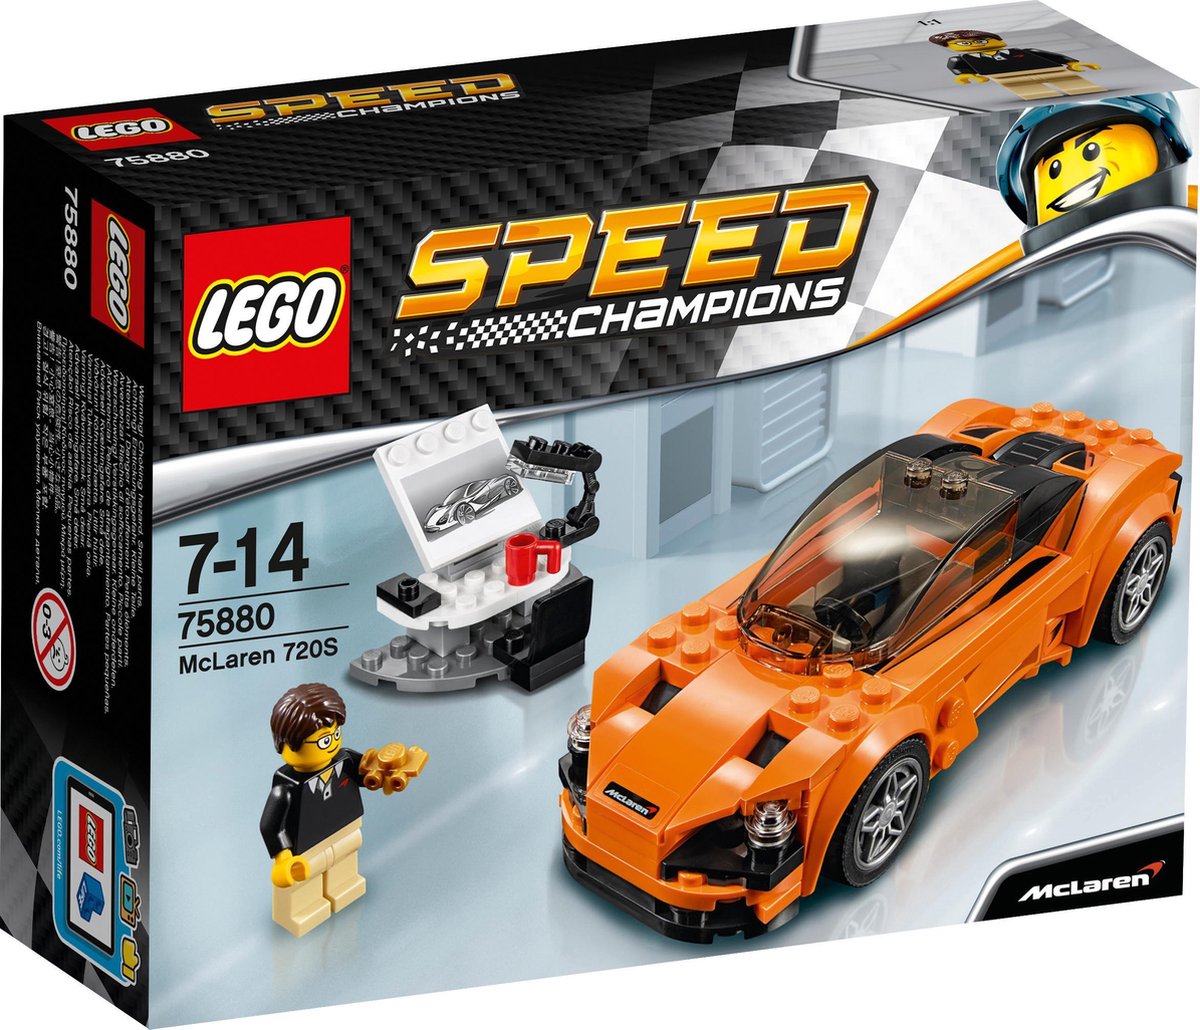 LEGO® Speed Champions 75879 Scuderia Ferrari SF16-H - Cdiscount